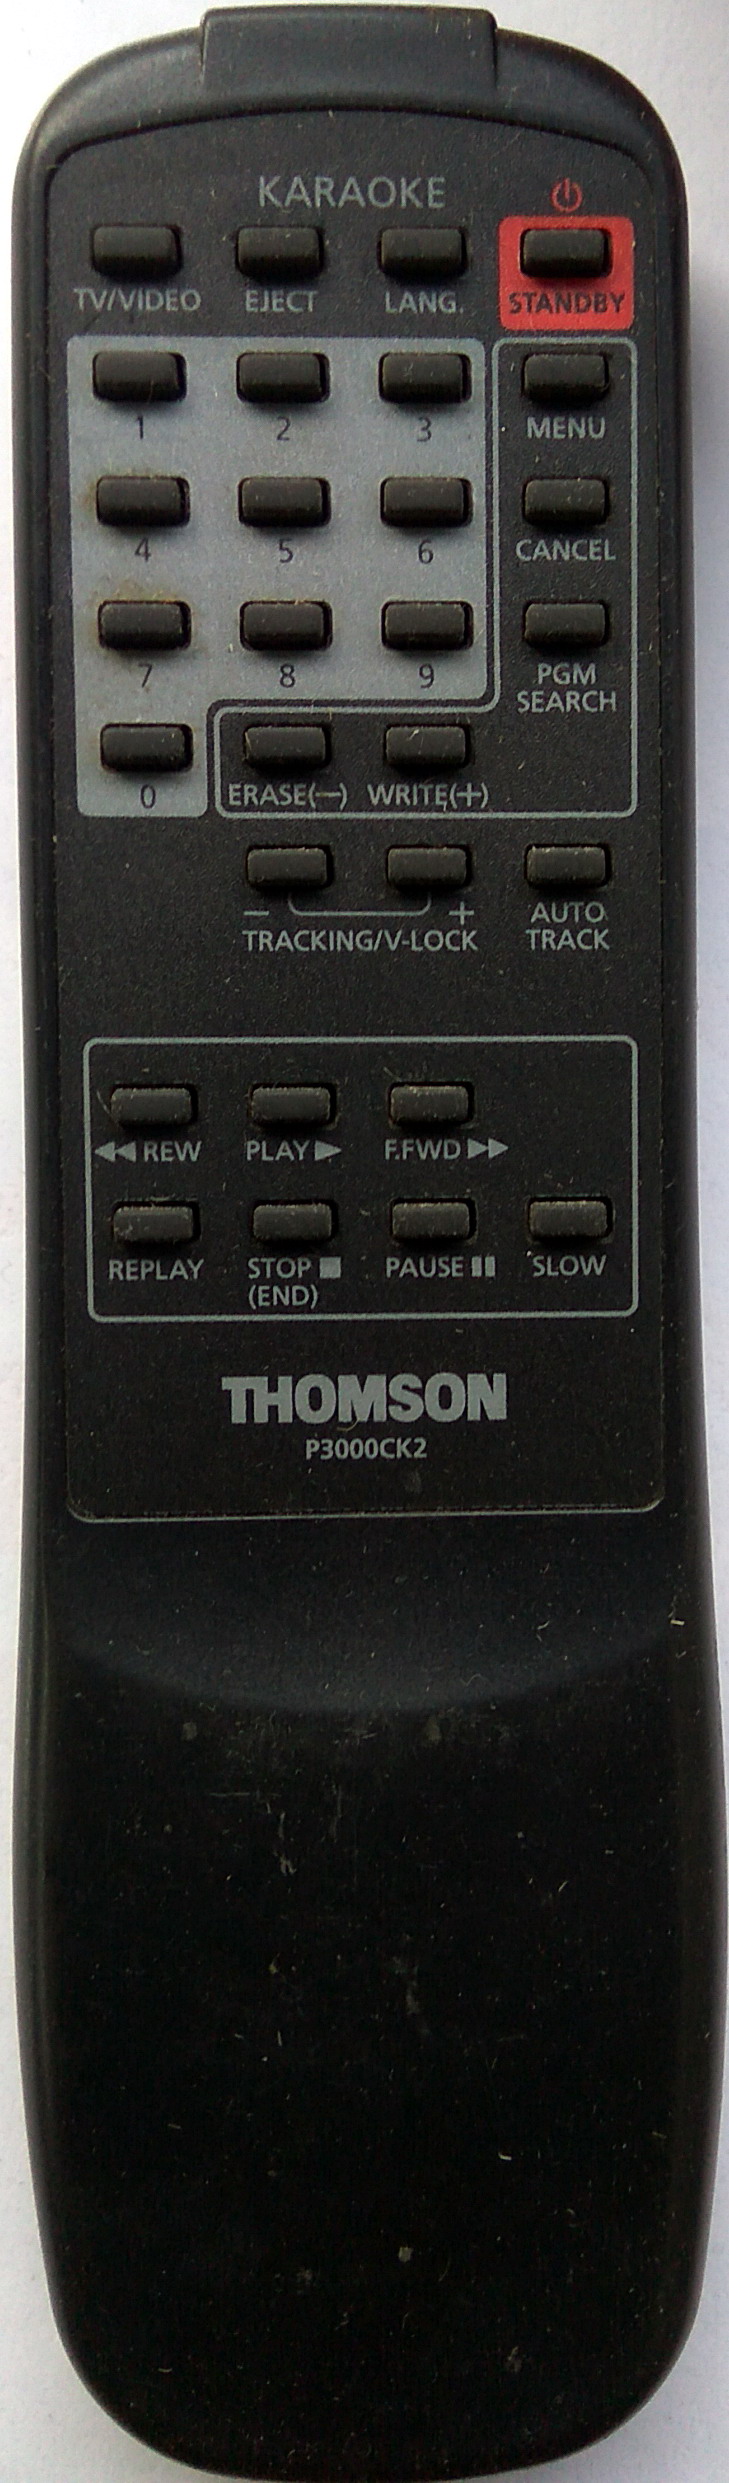 THOMSON P3000CK2.jpg